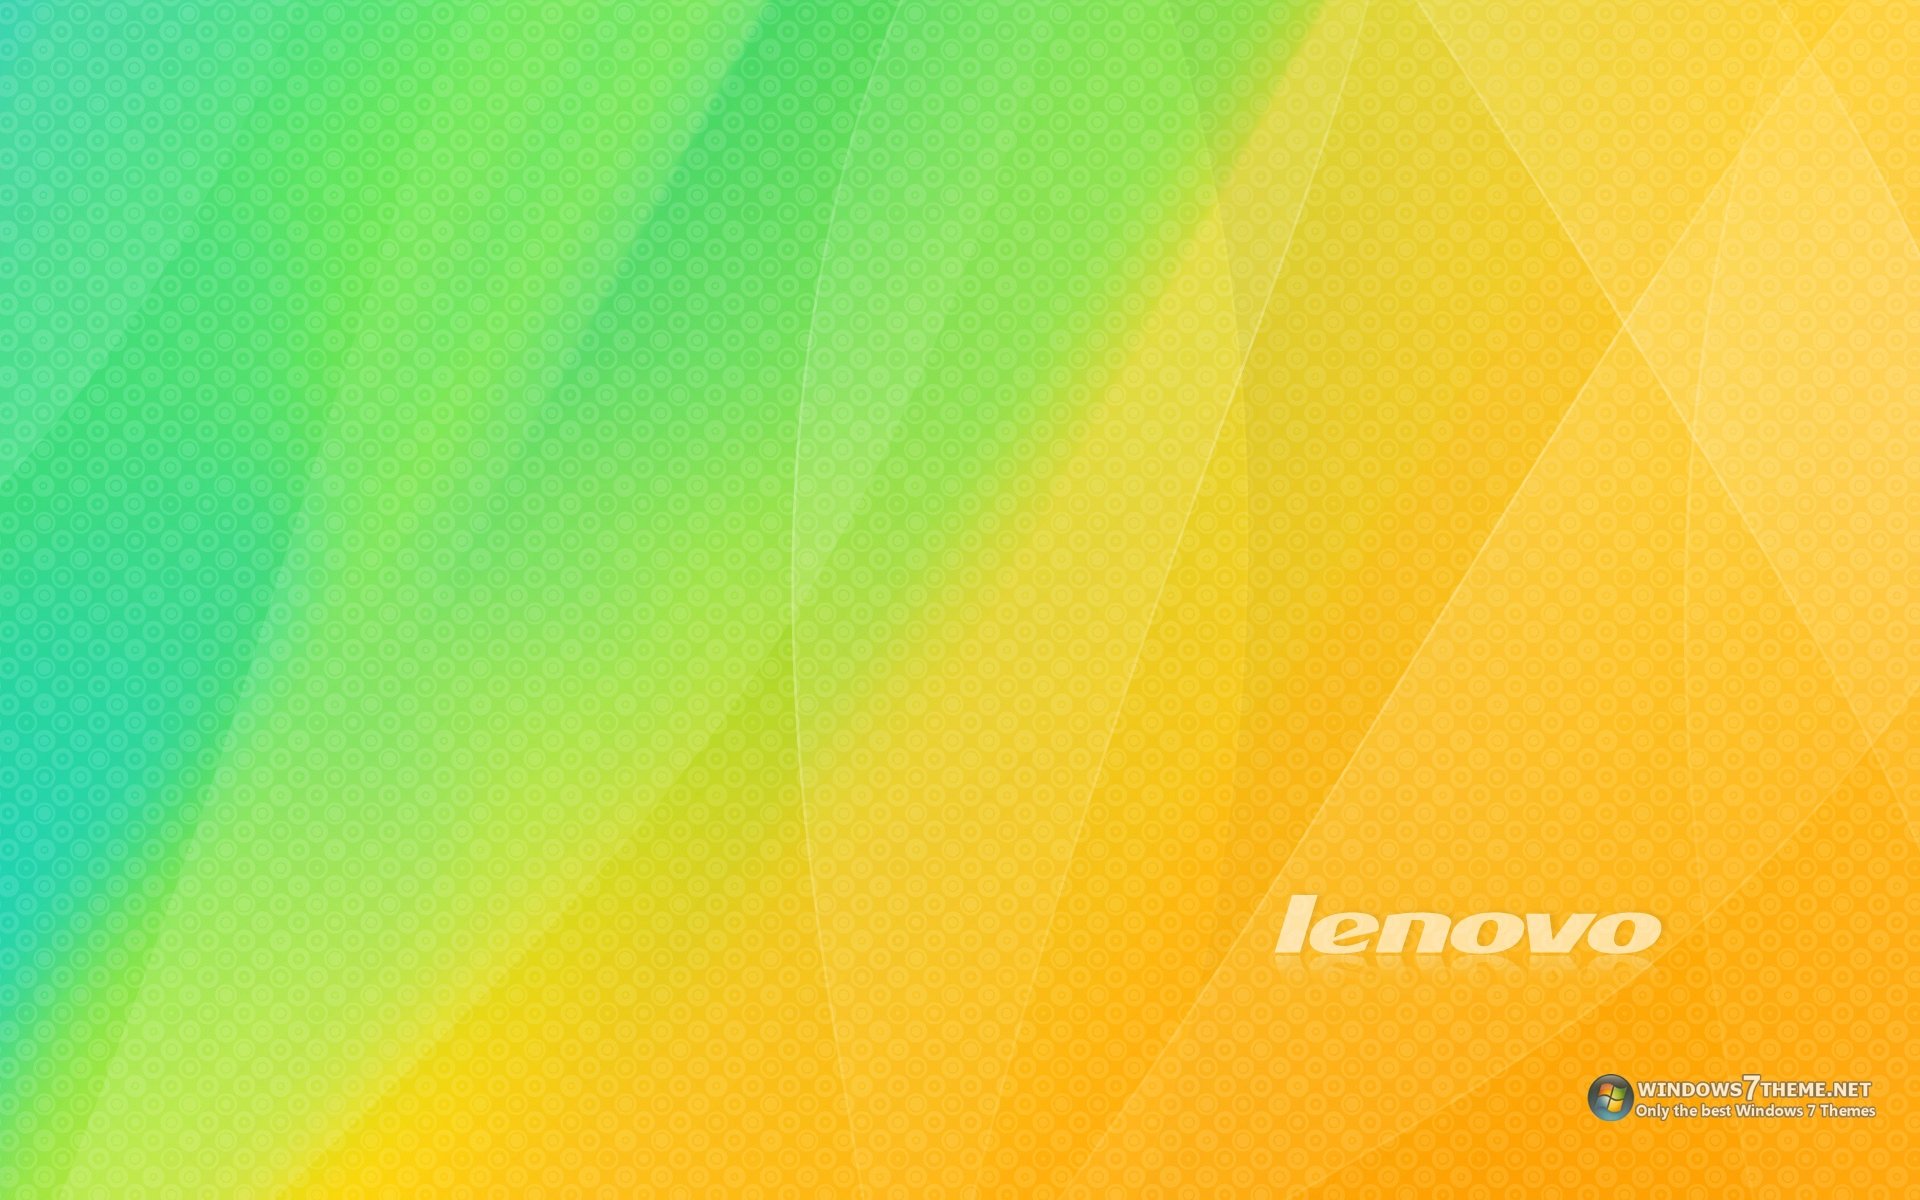 Lenovo Wallpaper Themes - Lenovo , HD Wallpaper & Backgrounds